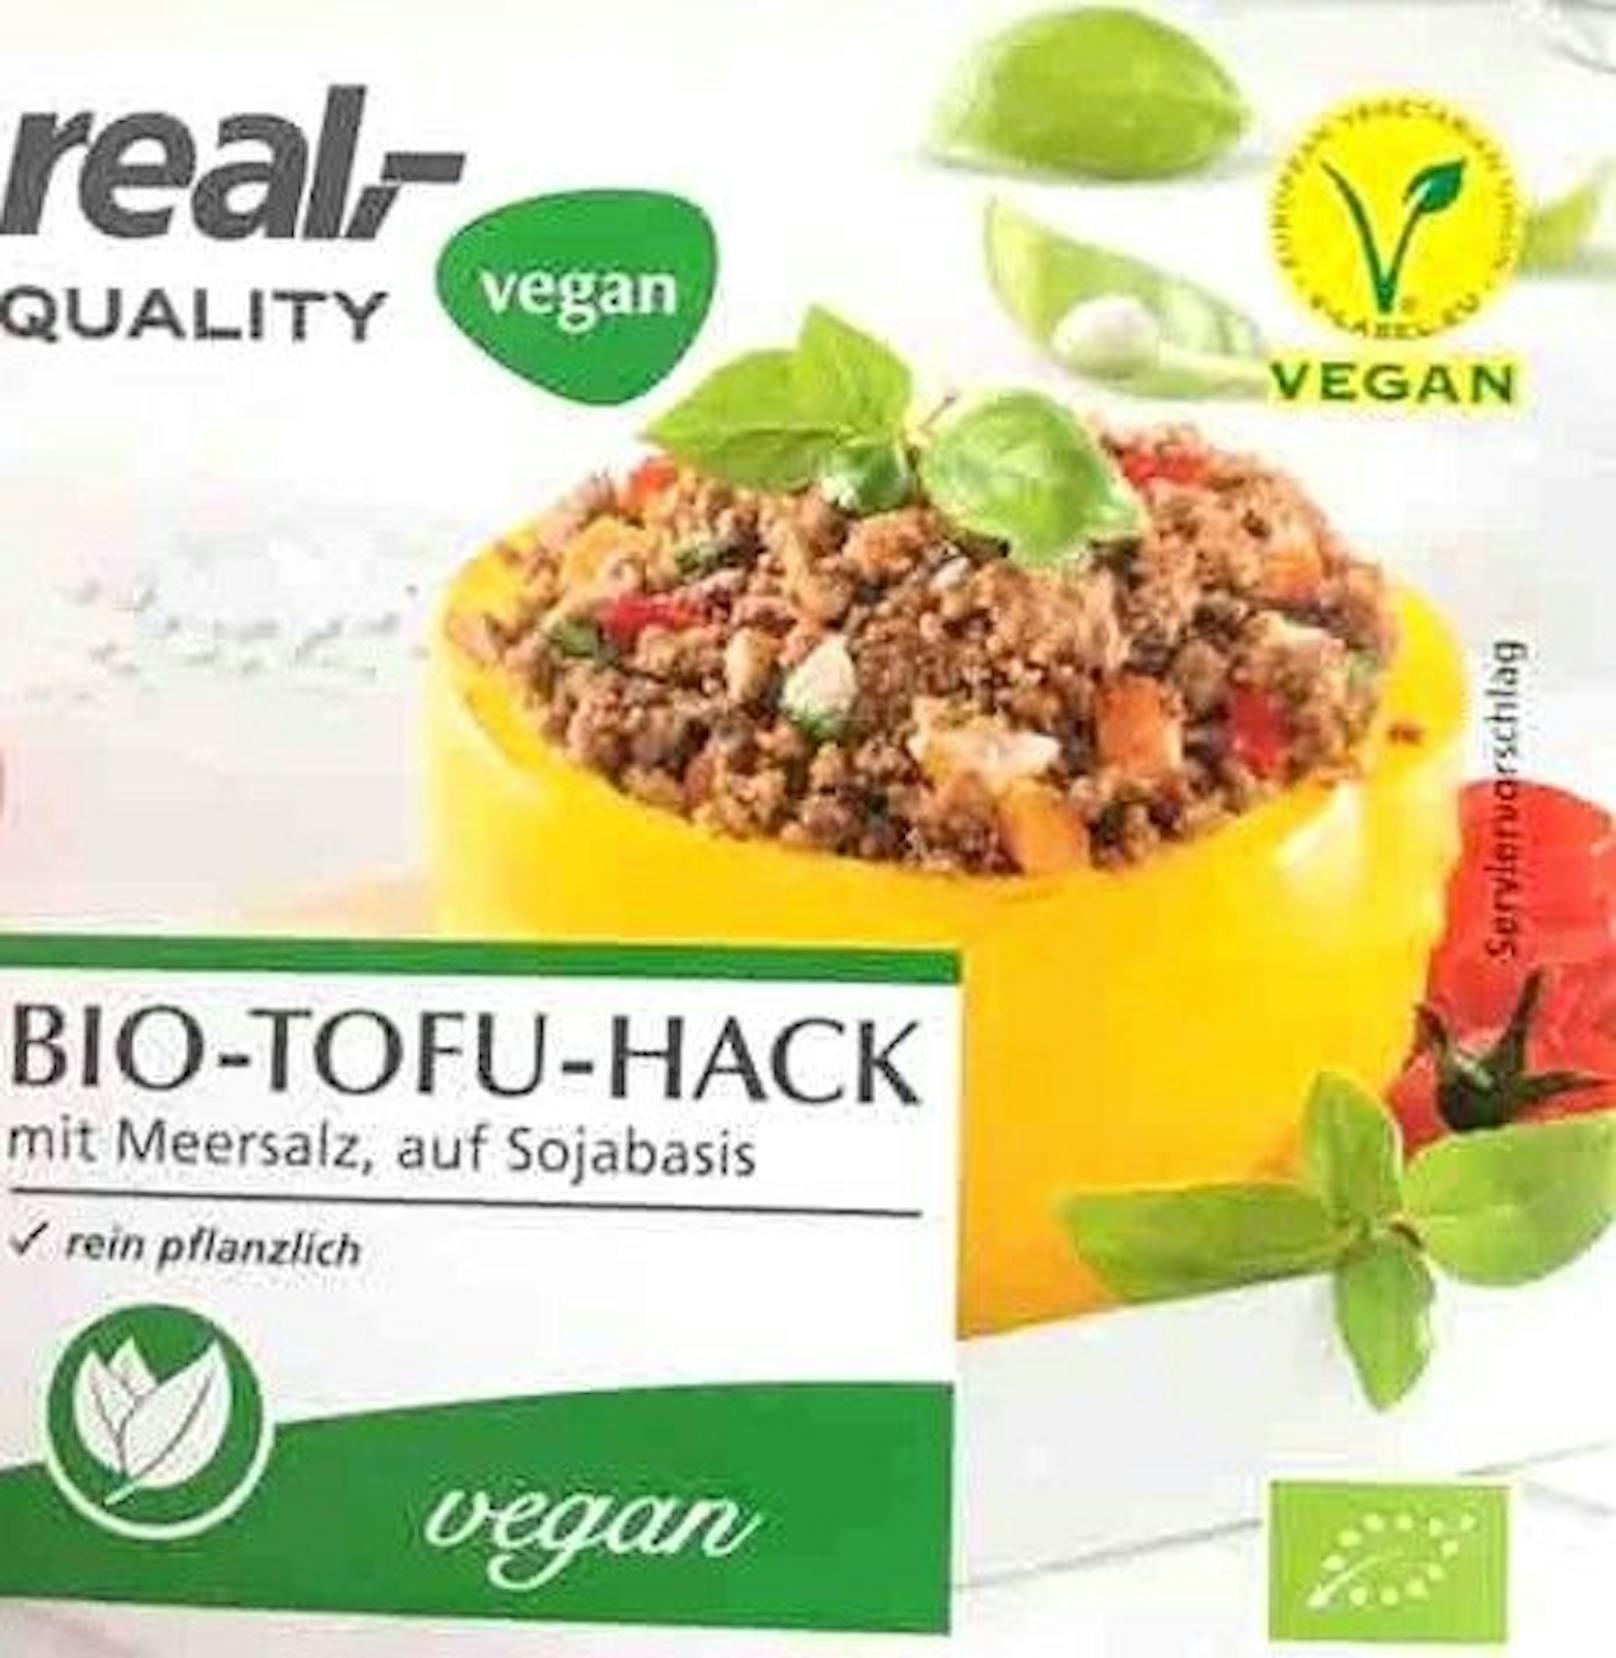 "Quality Bio-Tofu-Hack" von Real (2,21 Euro/200 g)